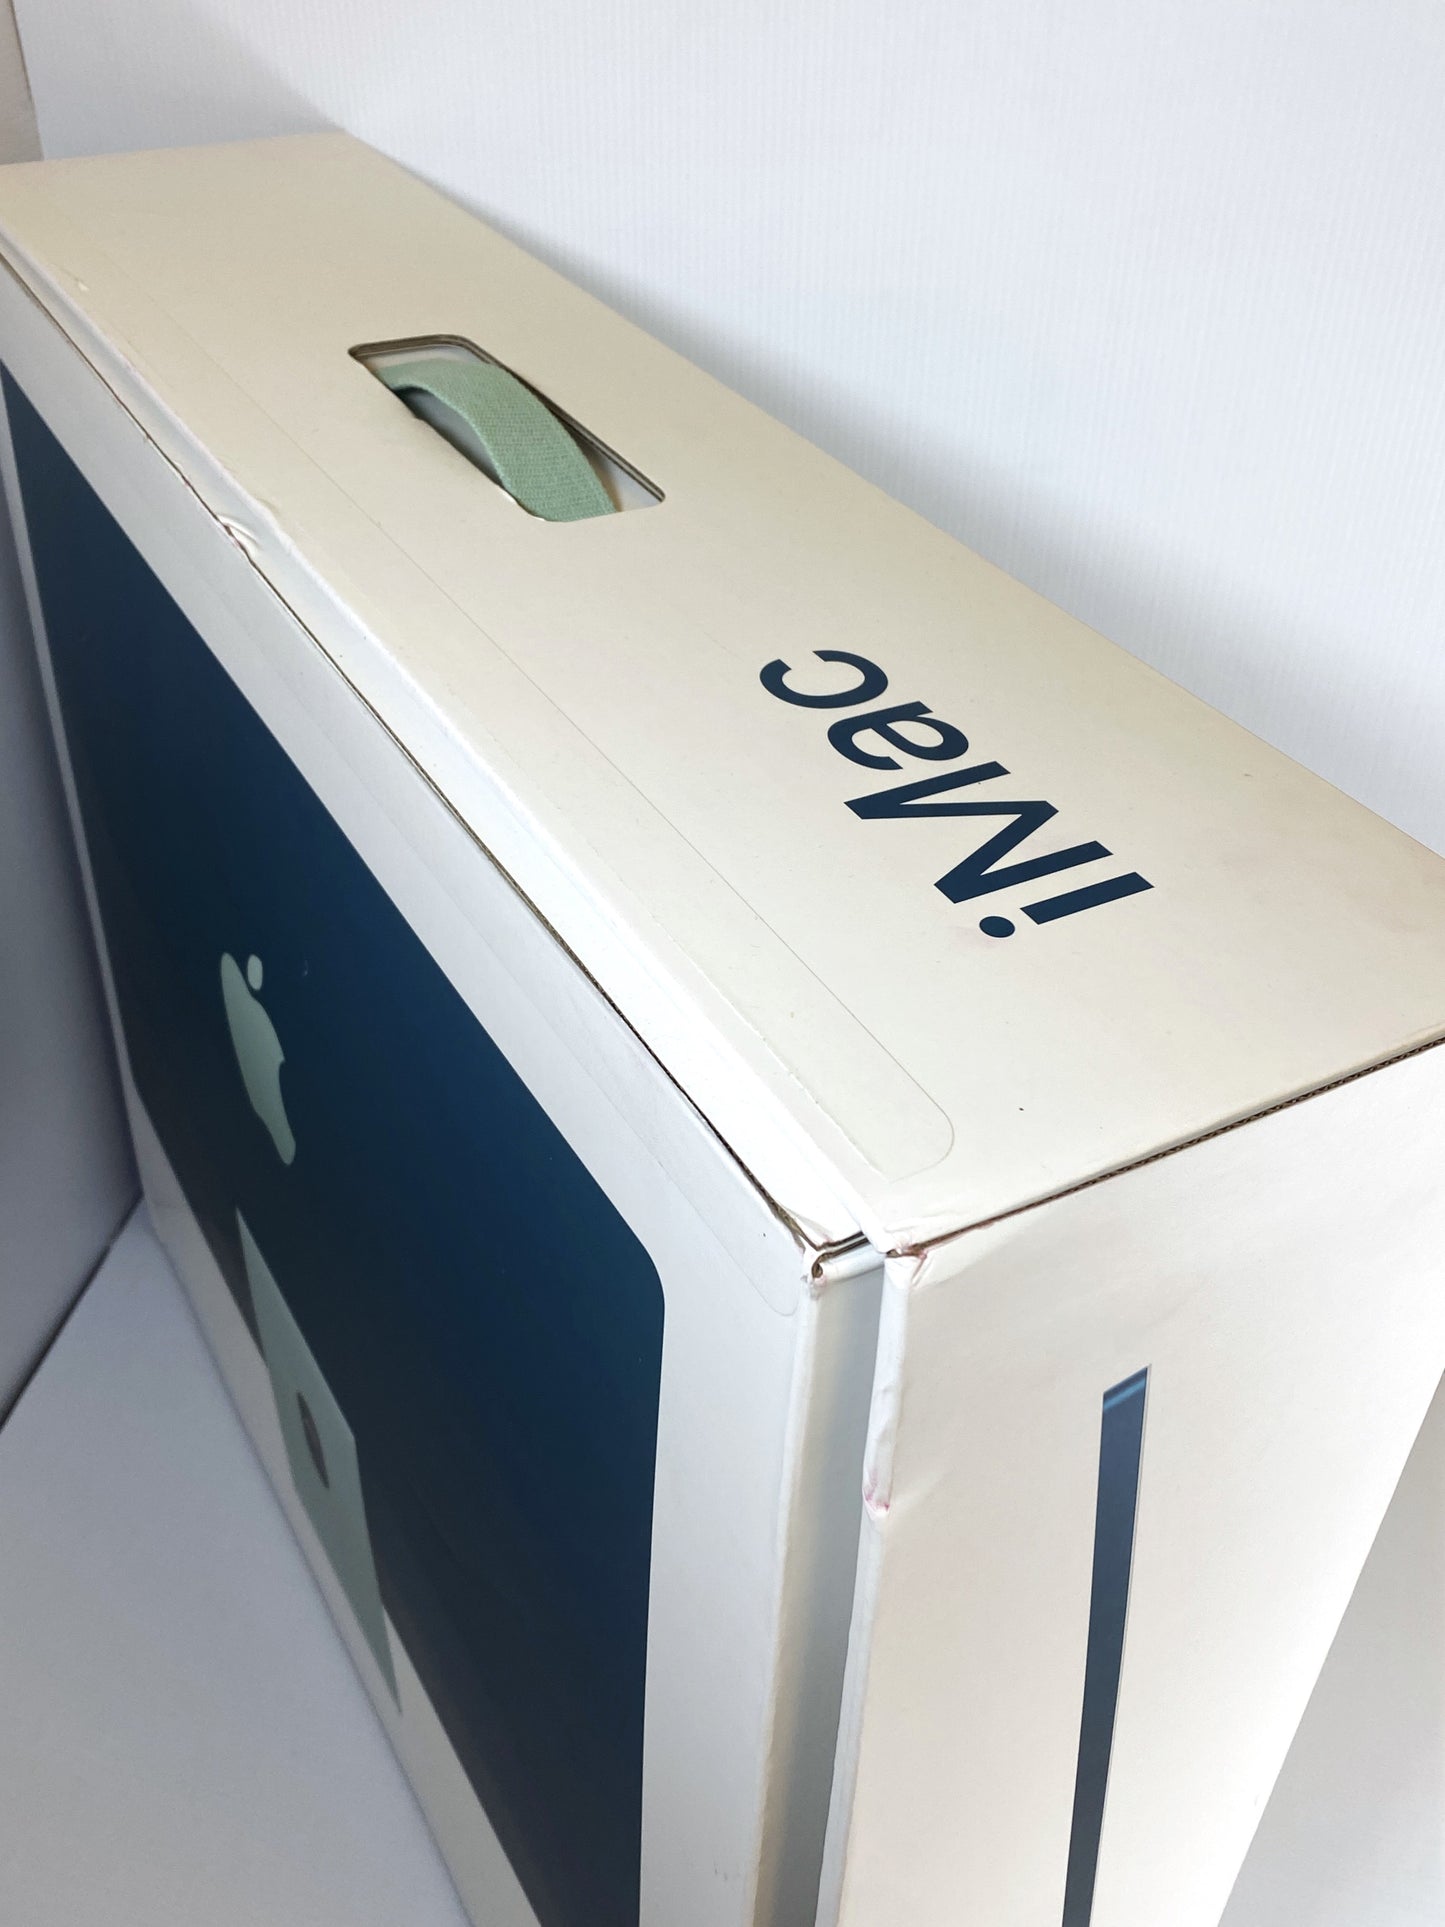 iMac 24" 2021 With Box